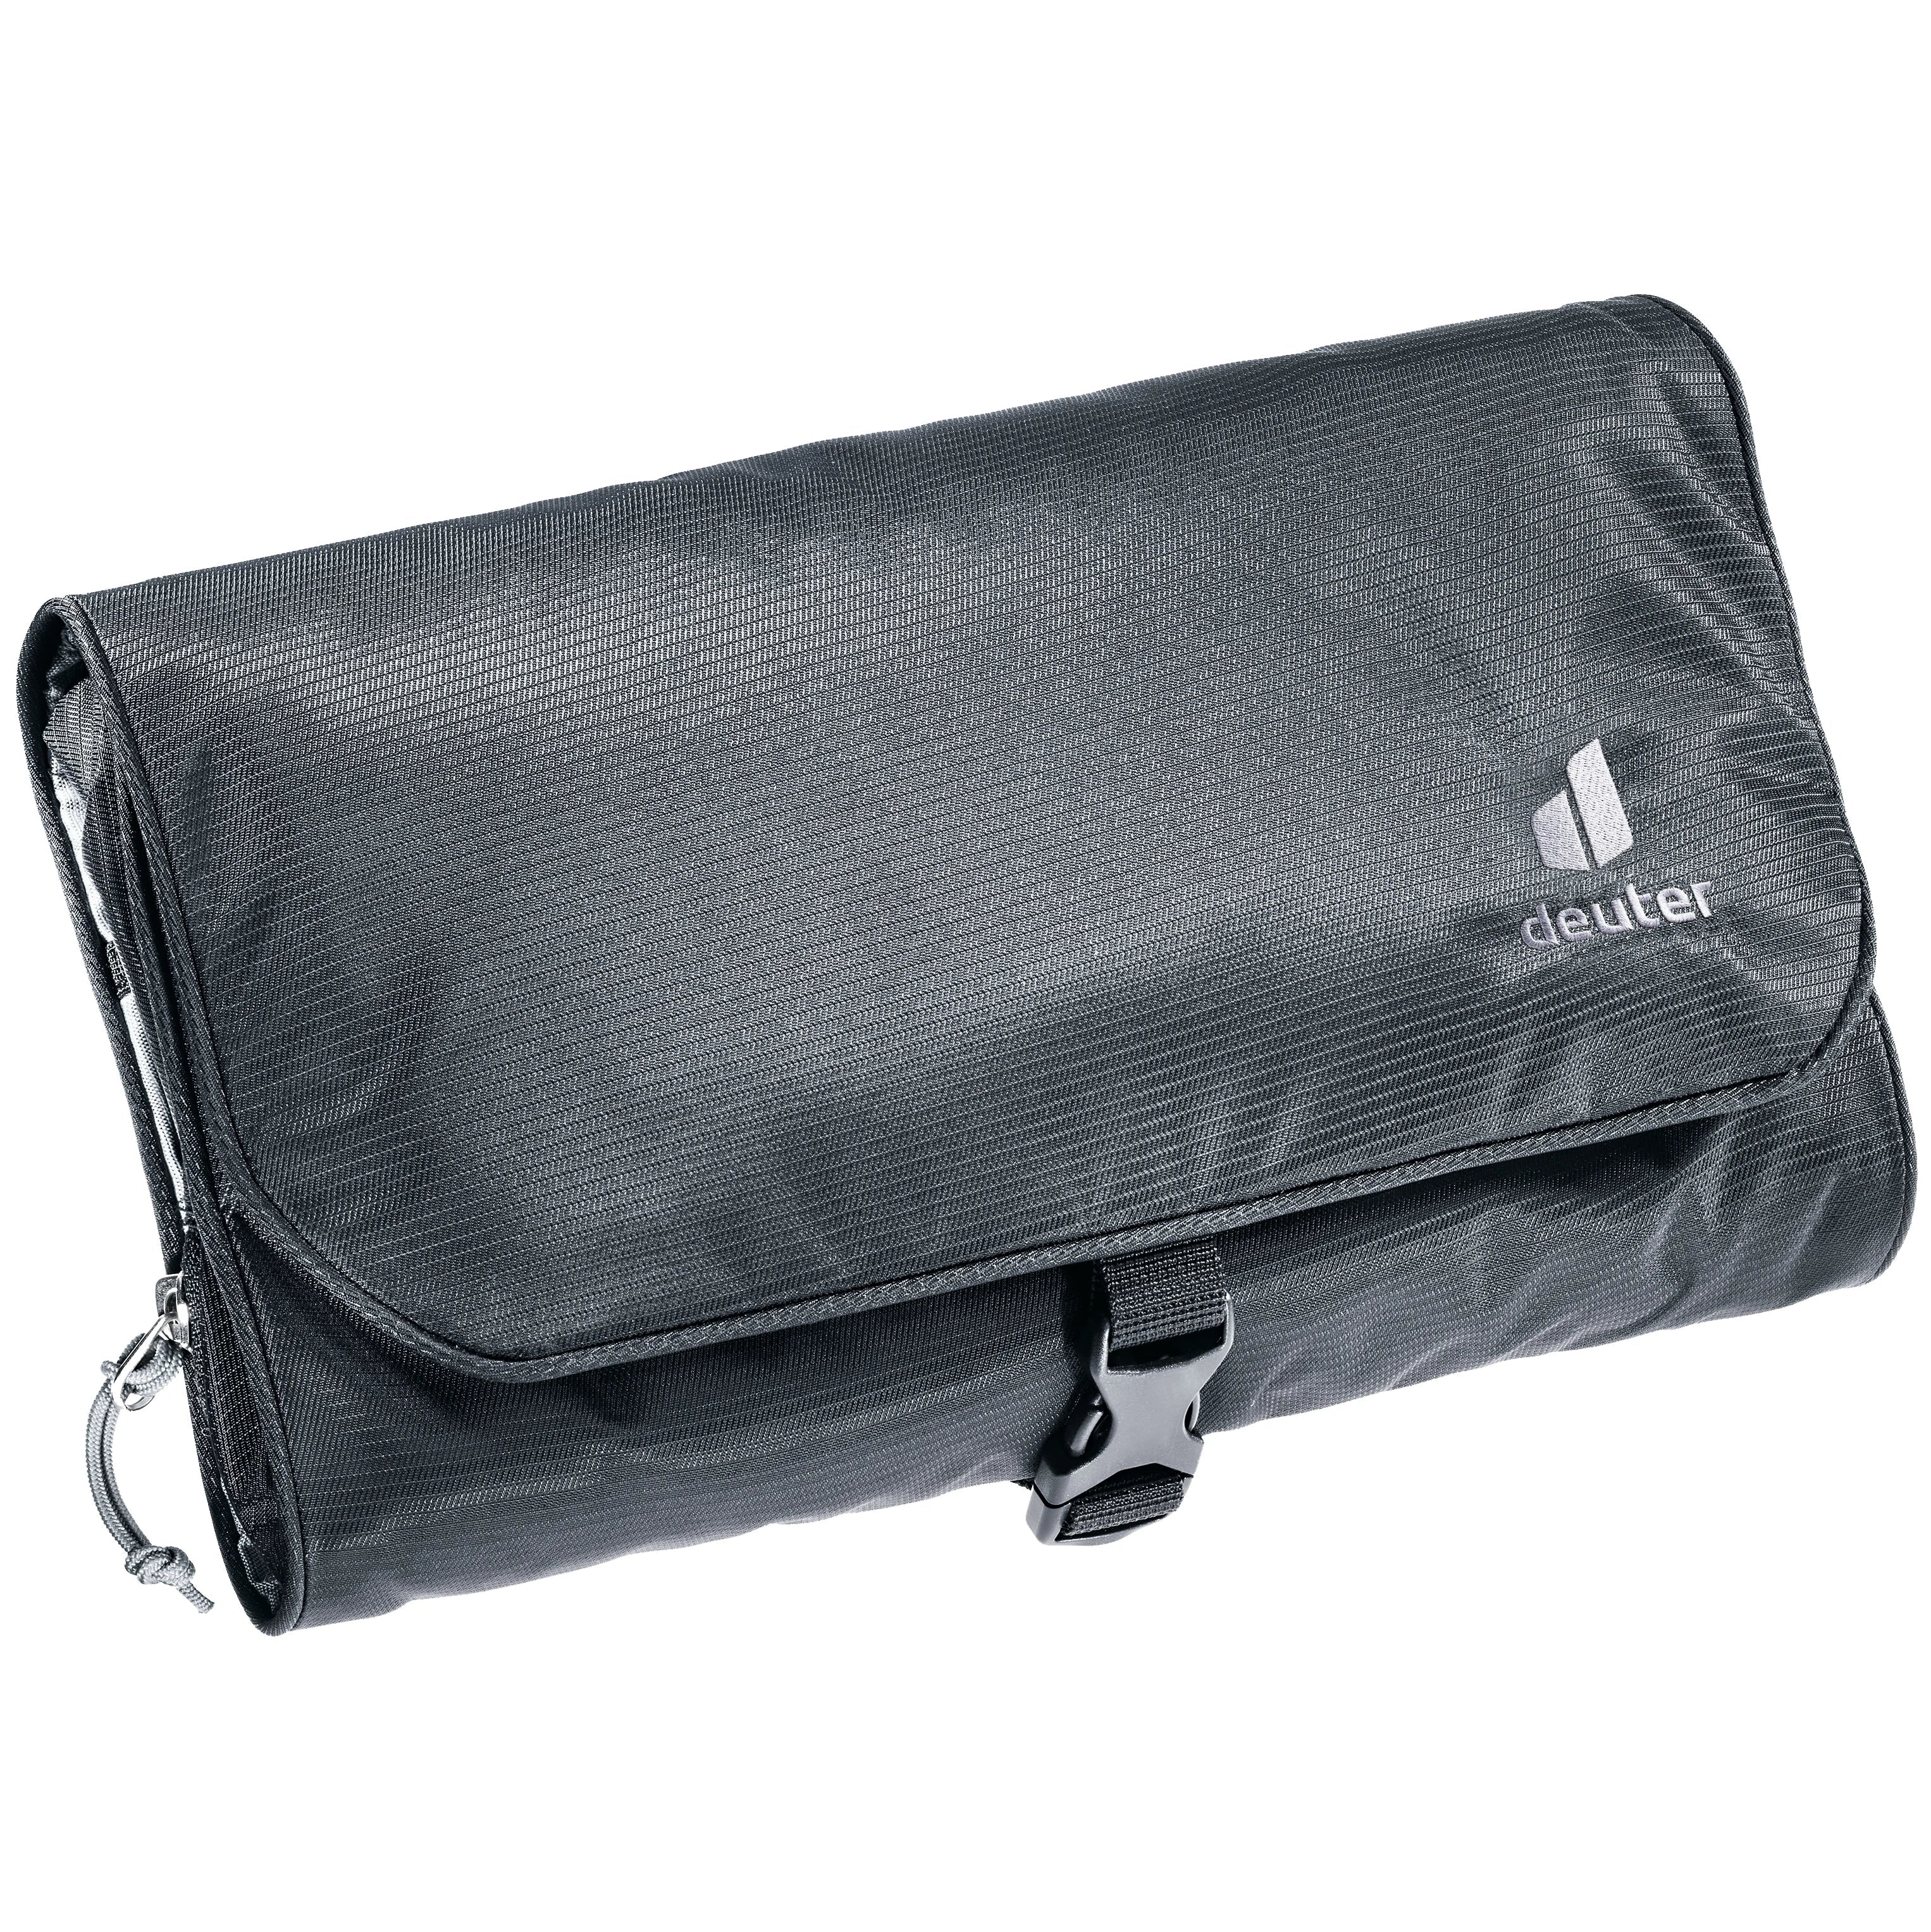 Deuter Accessories Wash Bag II 30 cm - Black